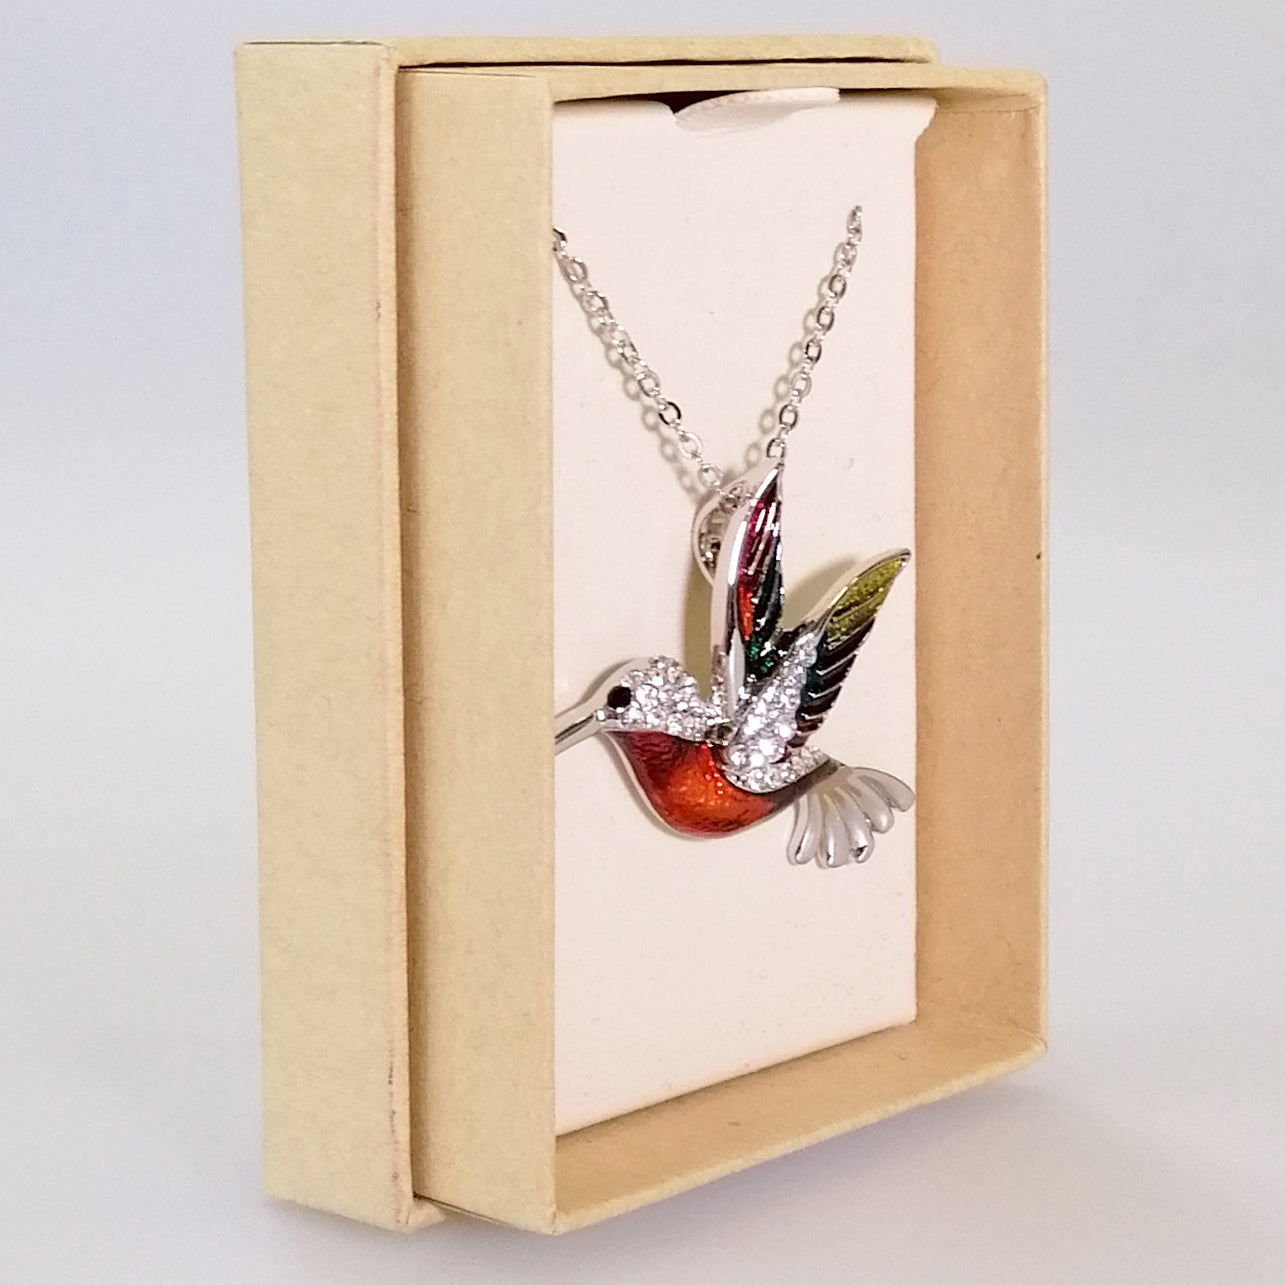 Kiwicraft - Hummingbird Necklace